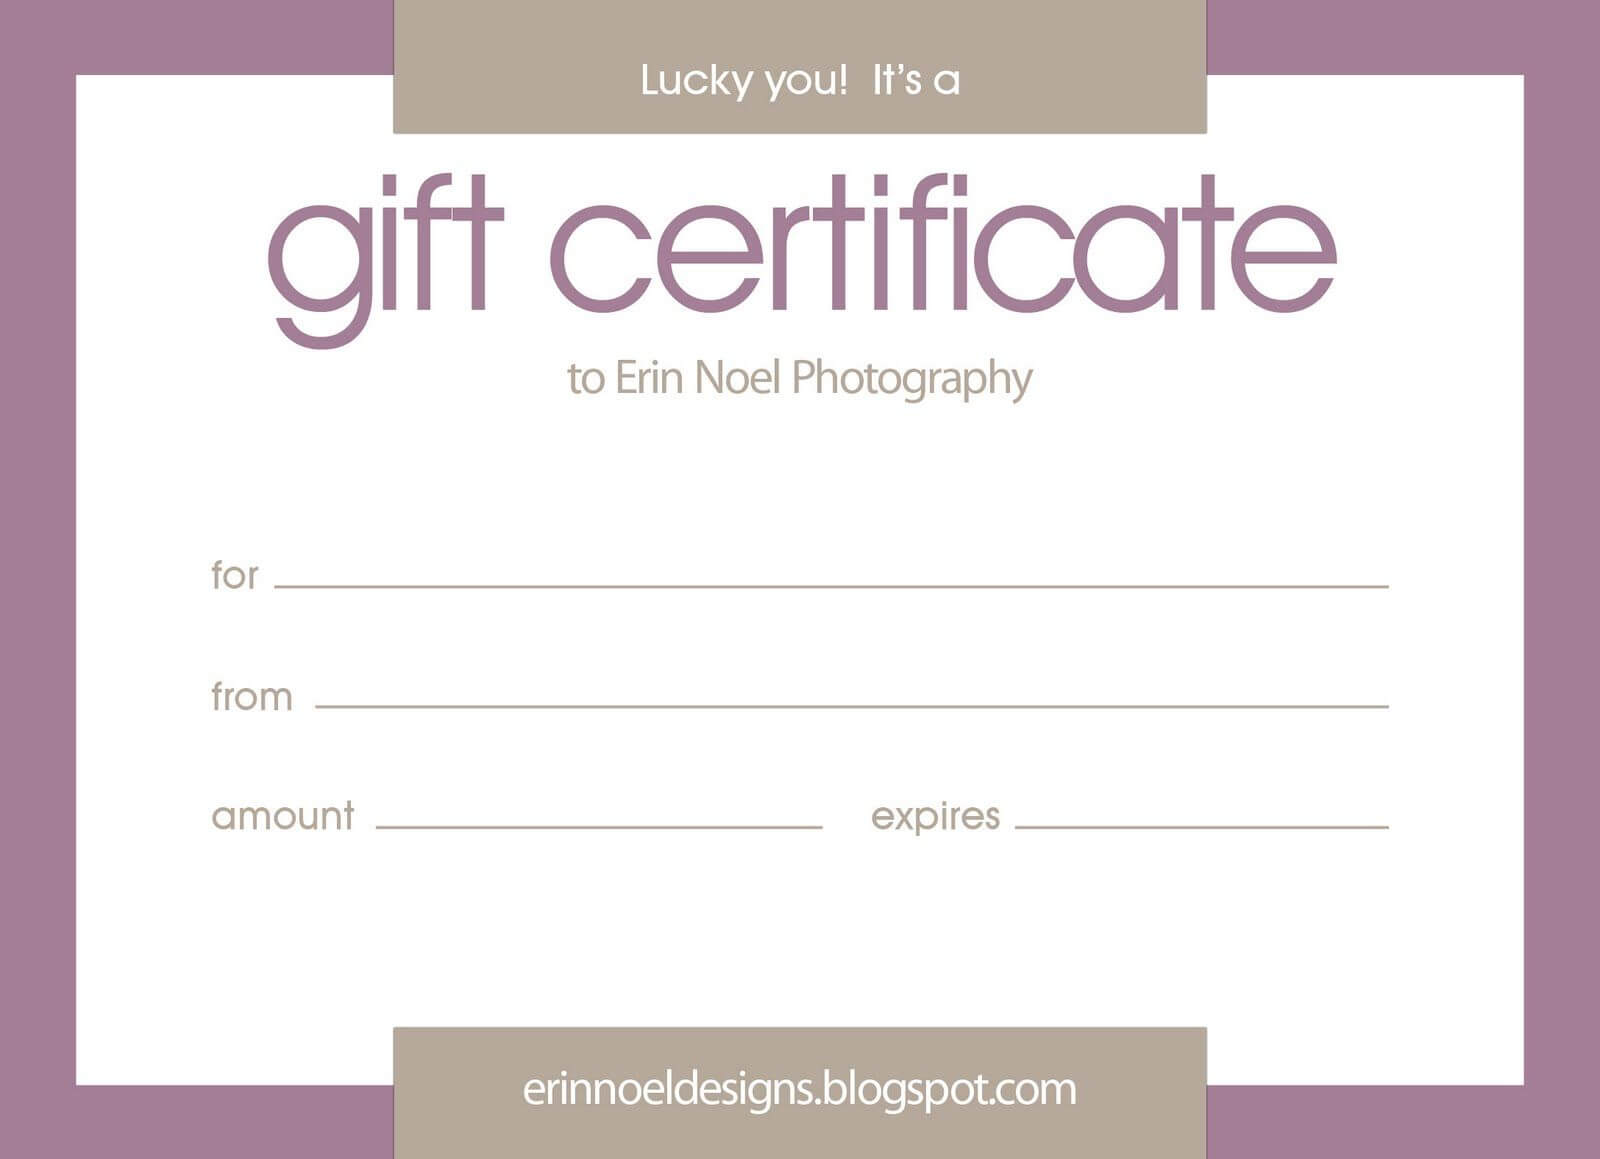 Erin Noel Designs: Gift Certificates! | Gift Certificate Regarding Fillable Gift Certificate Template Free